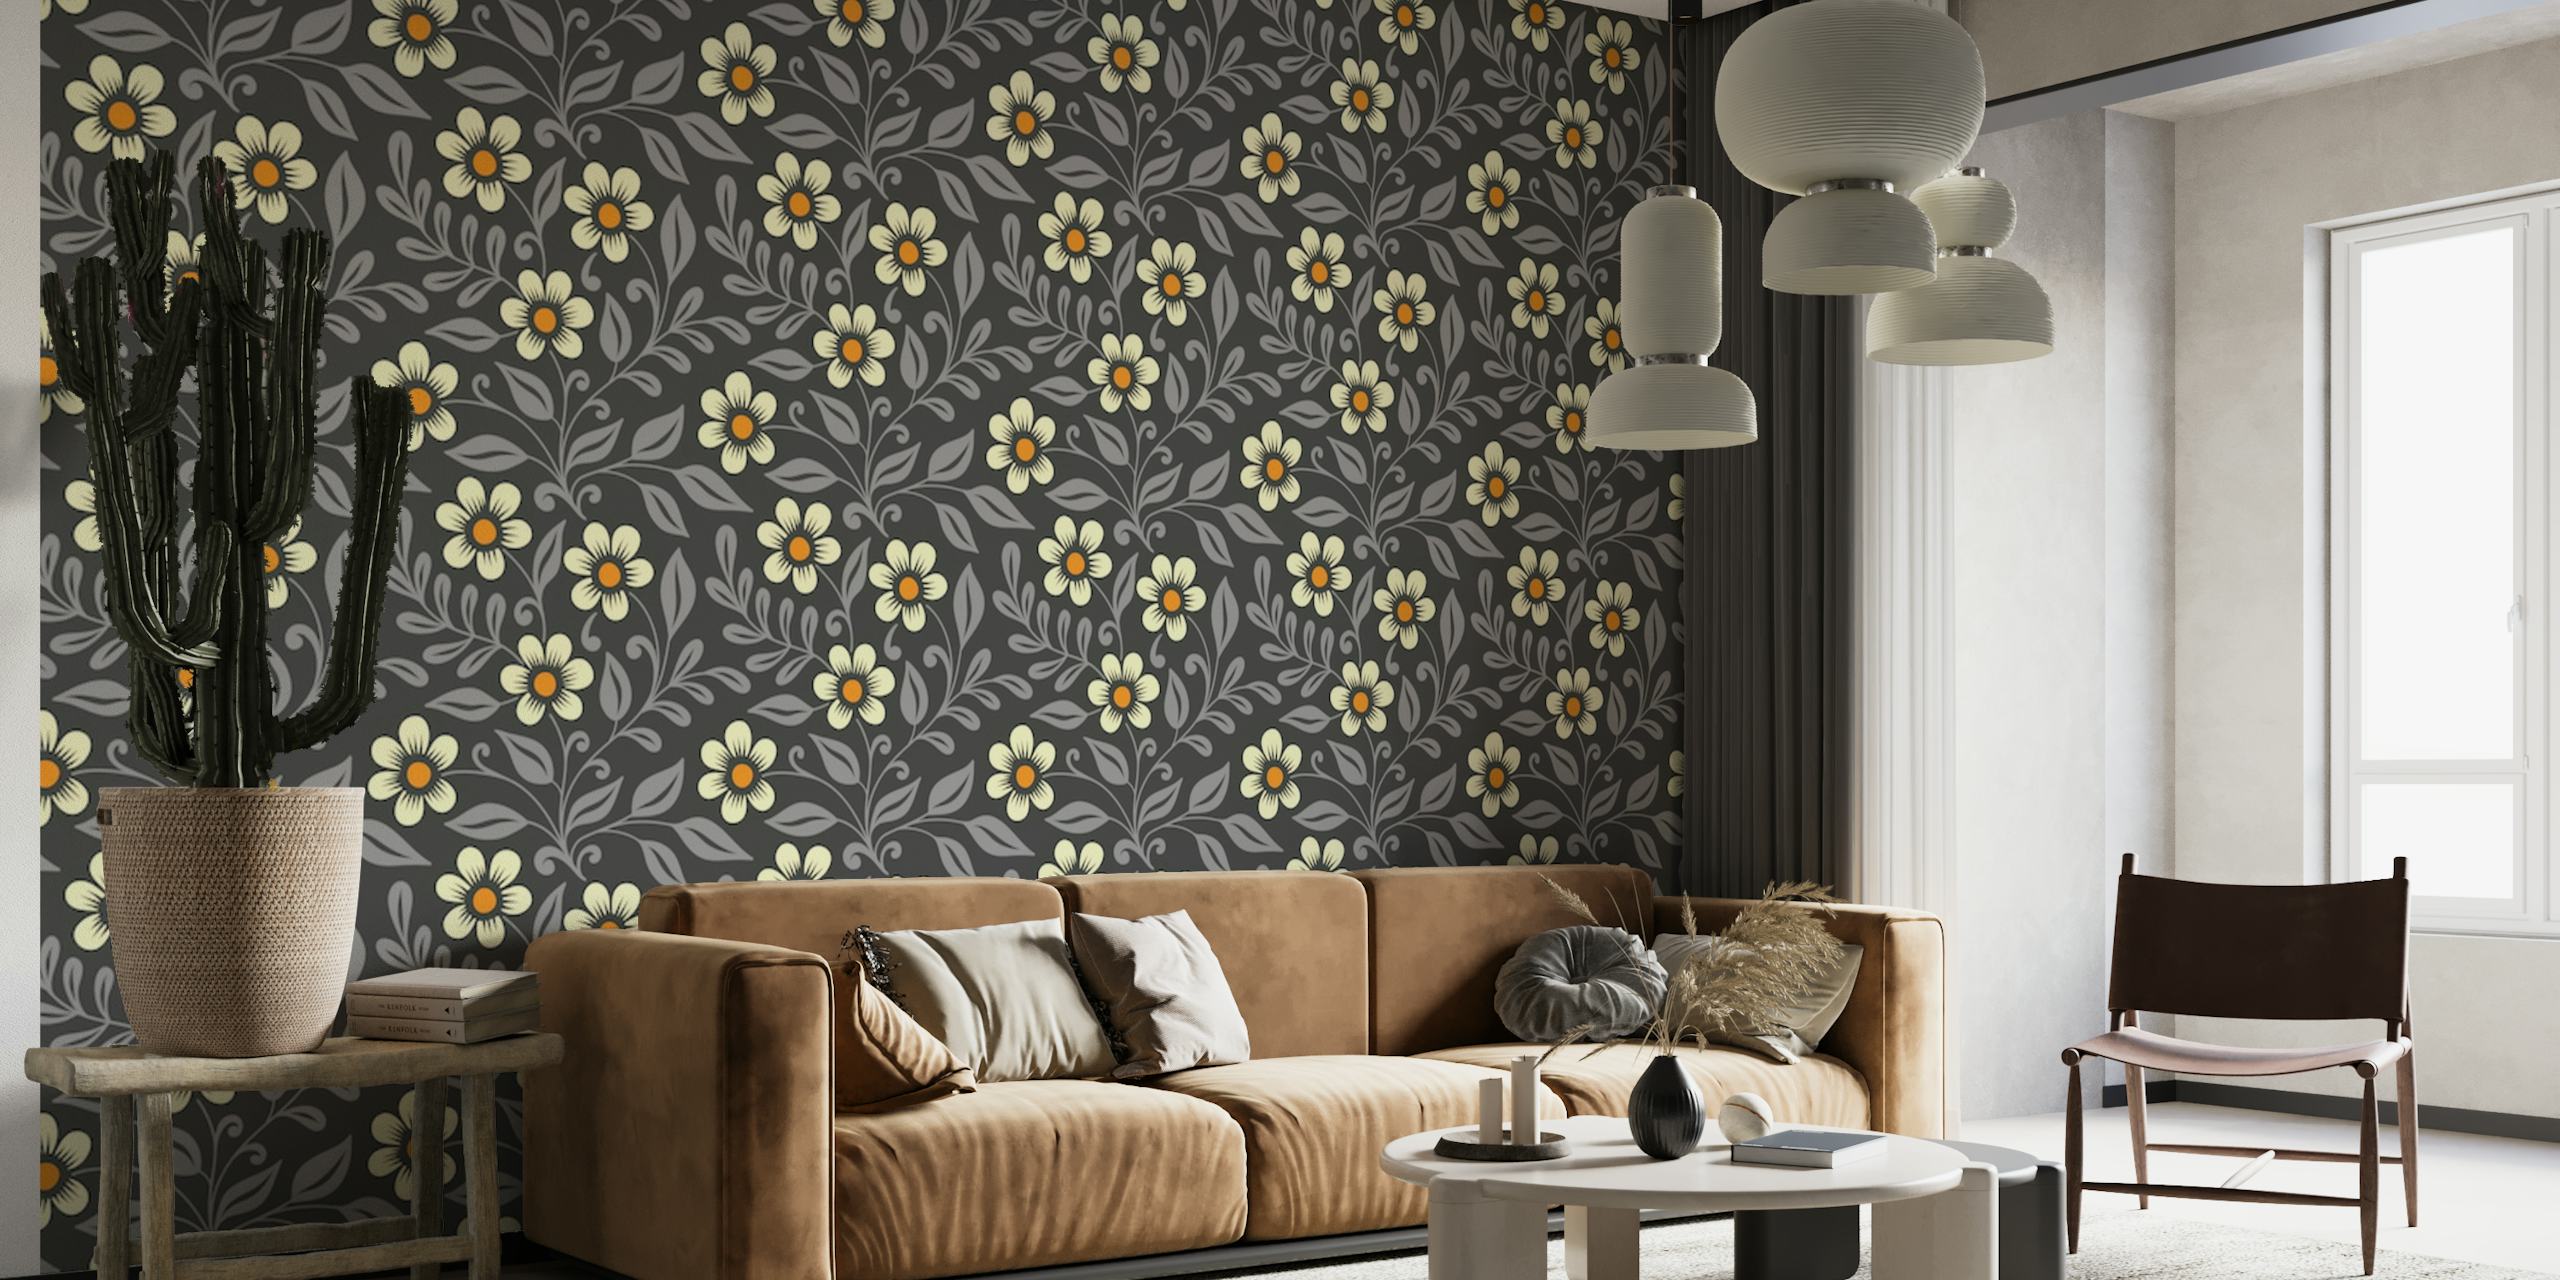 Šarmantan zidni mural s ditsy cvjetnim uzorkom s malim cvjetovima na sivoj pozadini